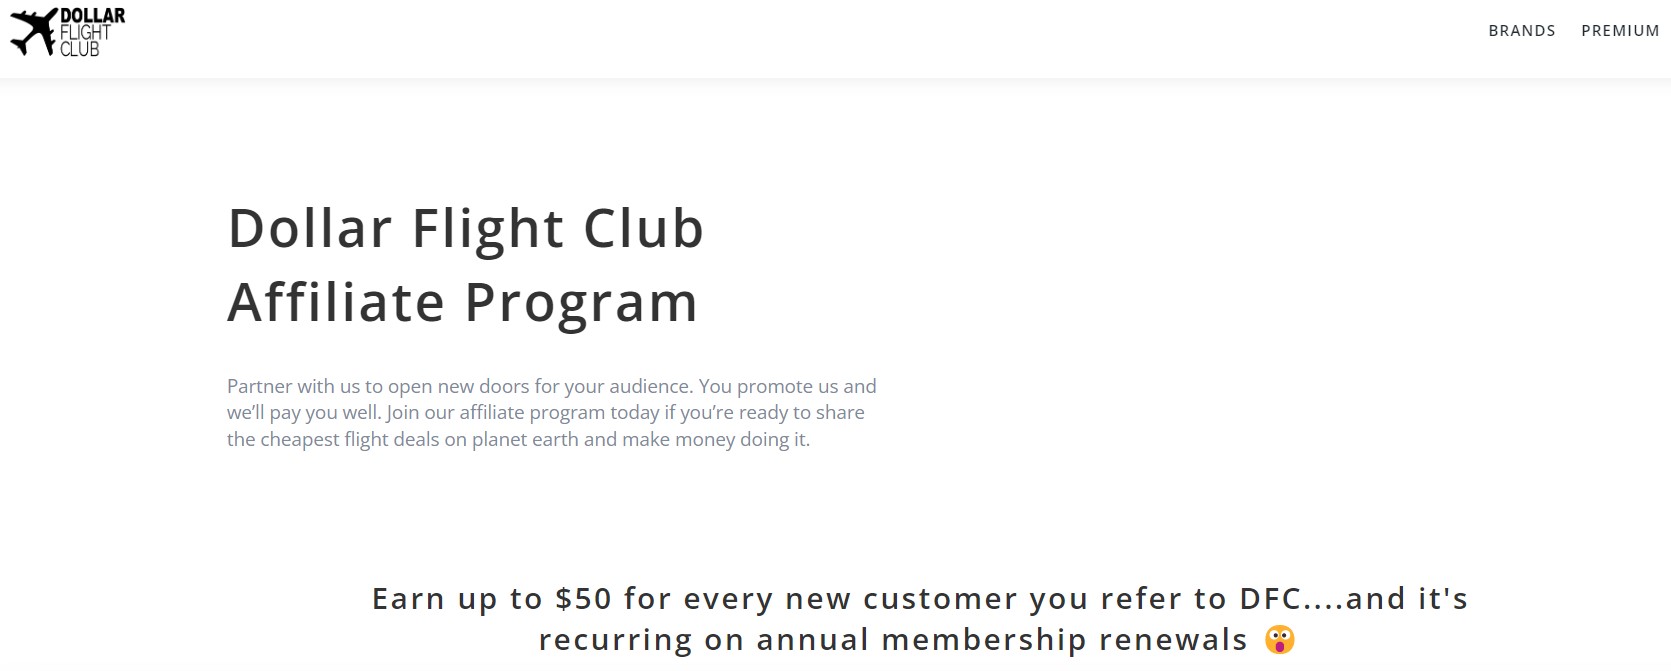 Dollar Flight Club Airline Affiliate Programs